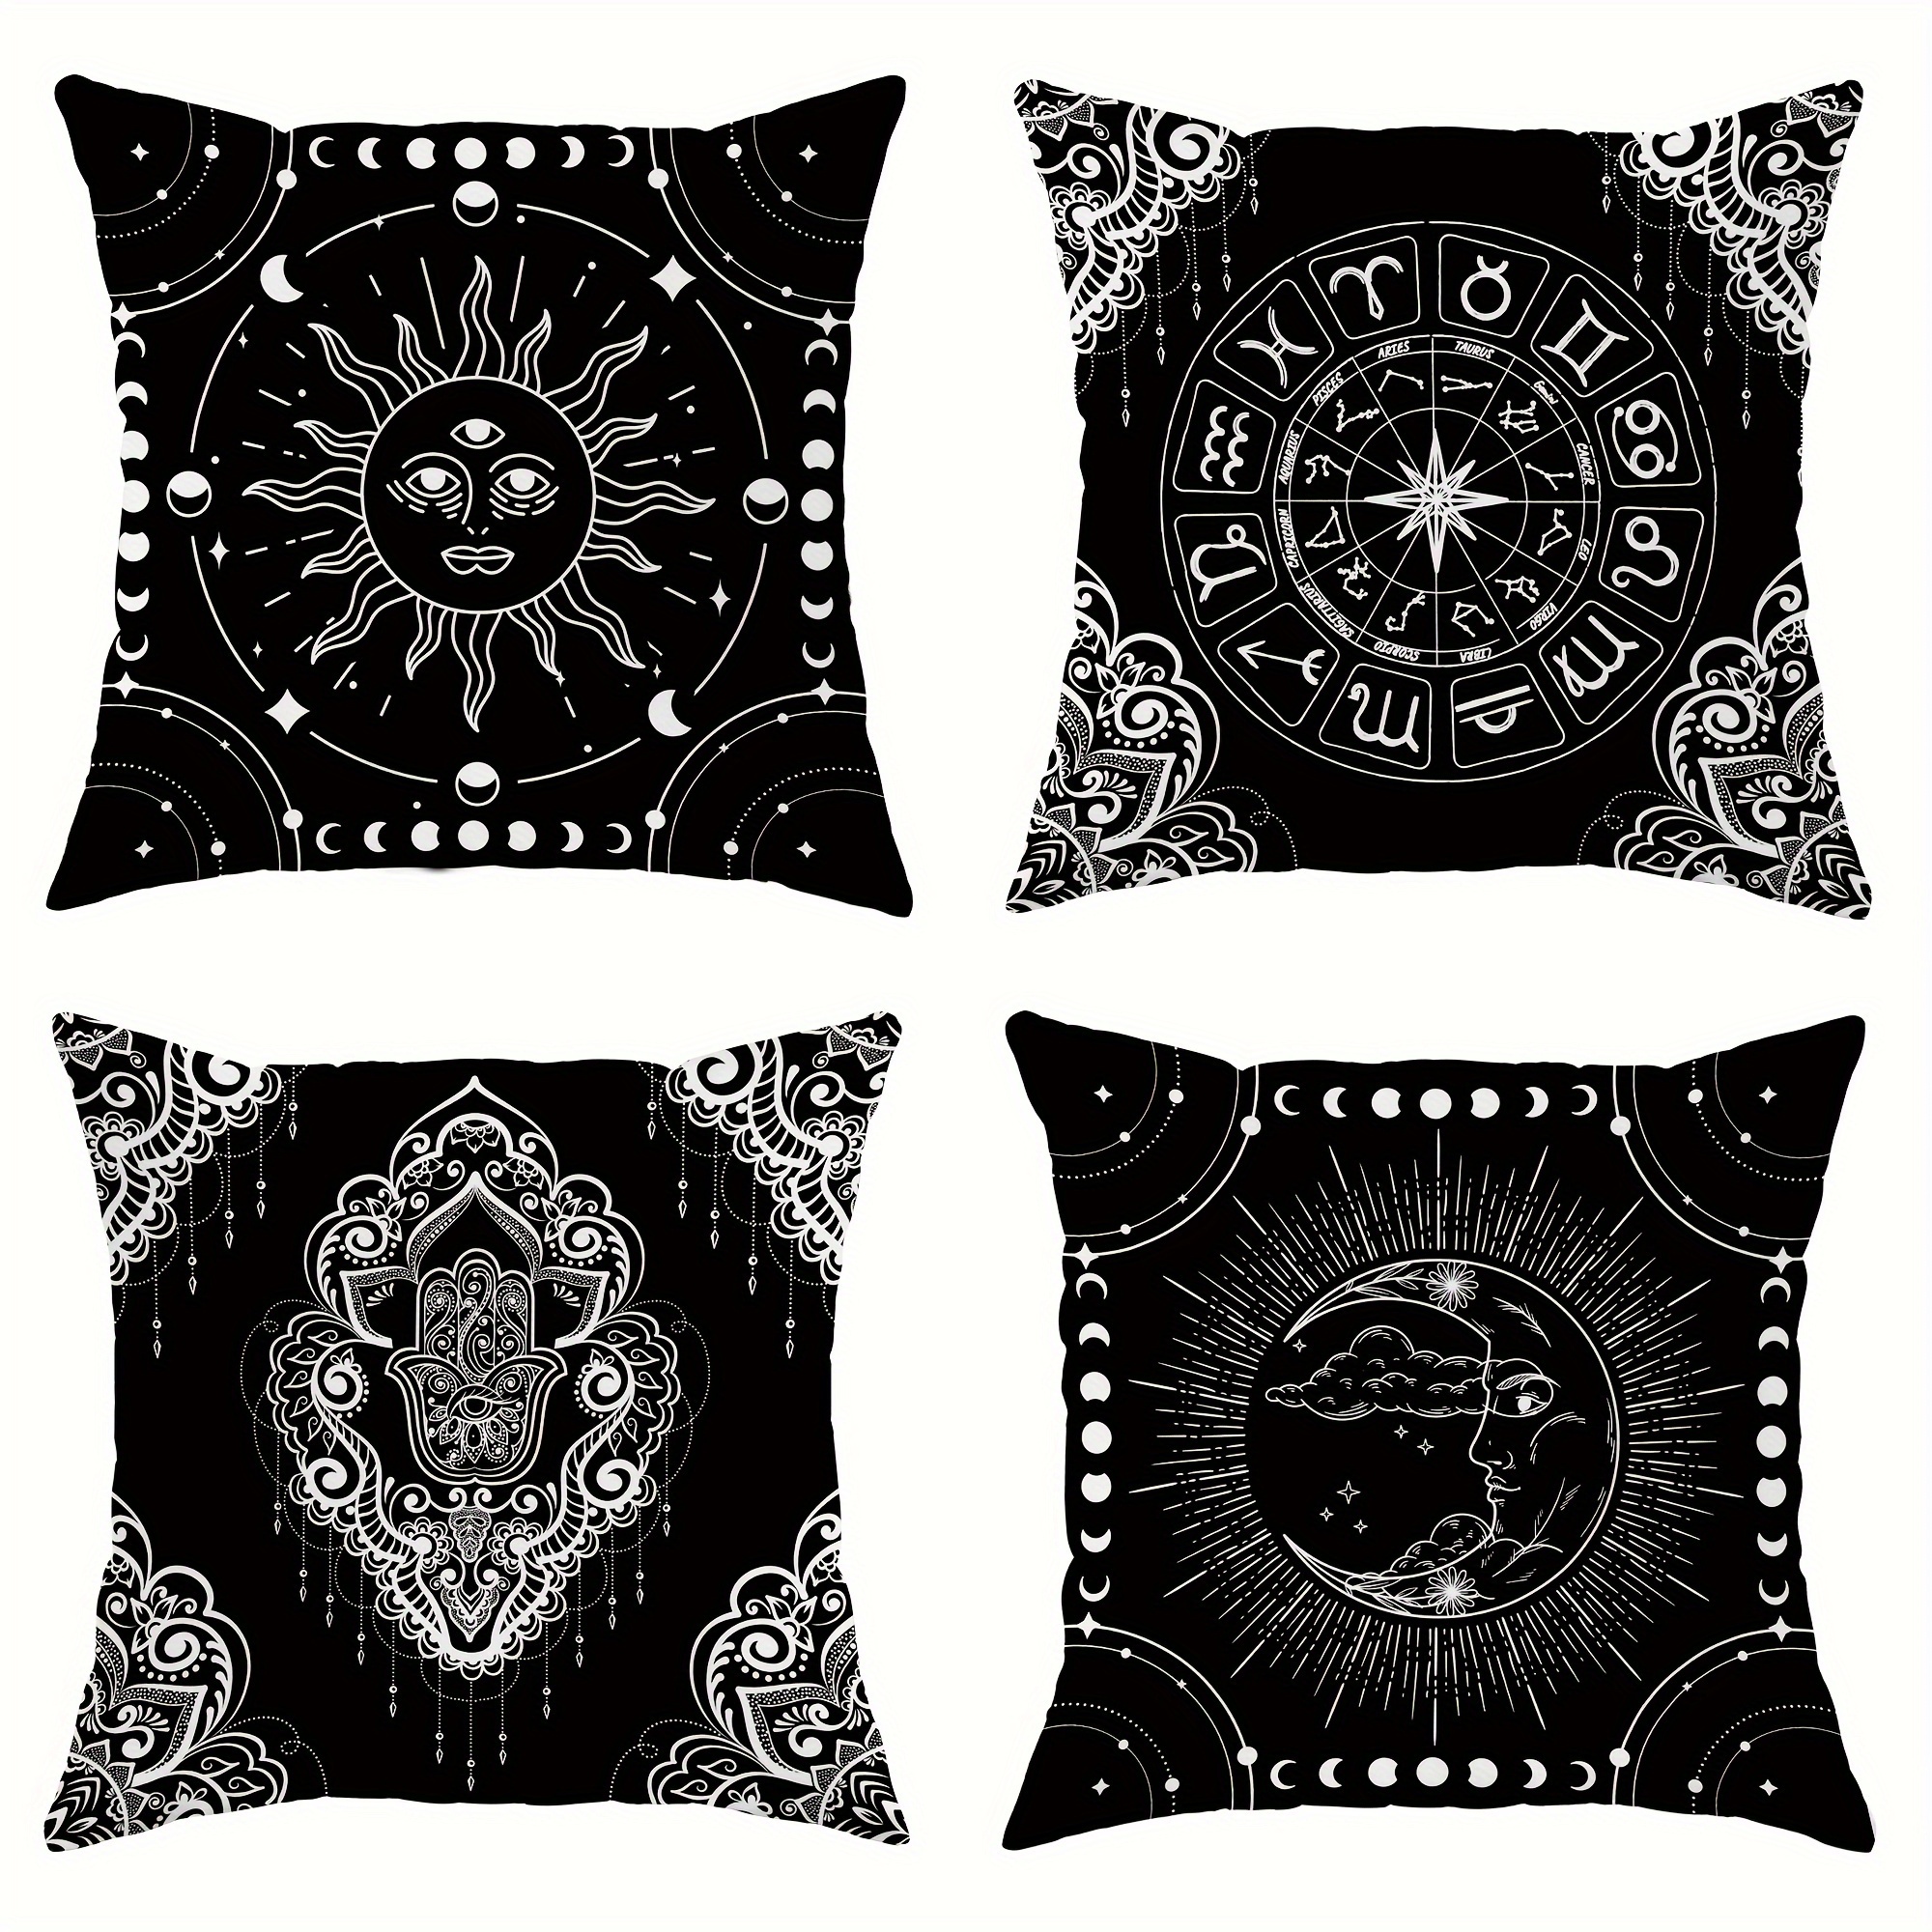 

Boho-chic Velvet Throw Pillow Covers, 4pc Set - Sun & Moon Constellation Design, Black & White, 18x18 Inch, Perfect For Living Room & Bedroom